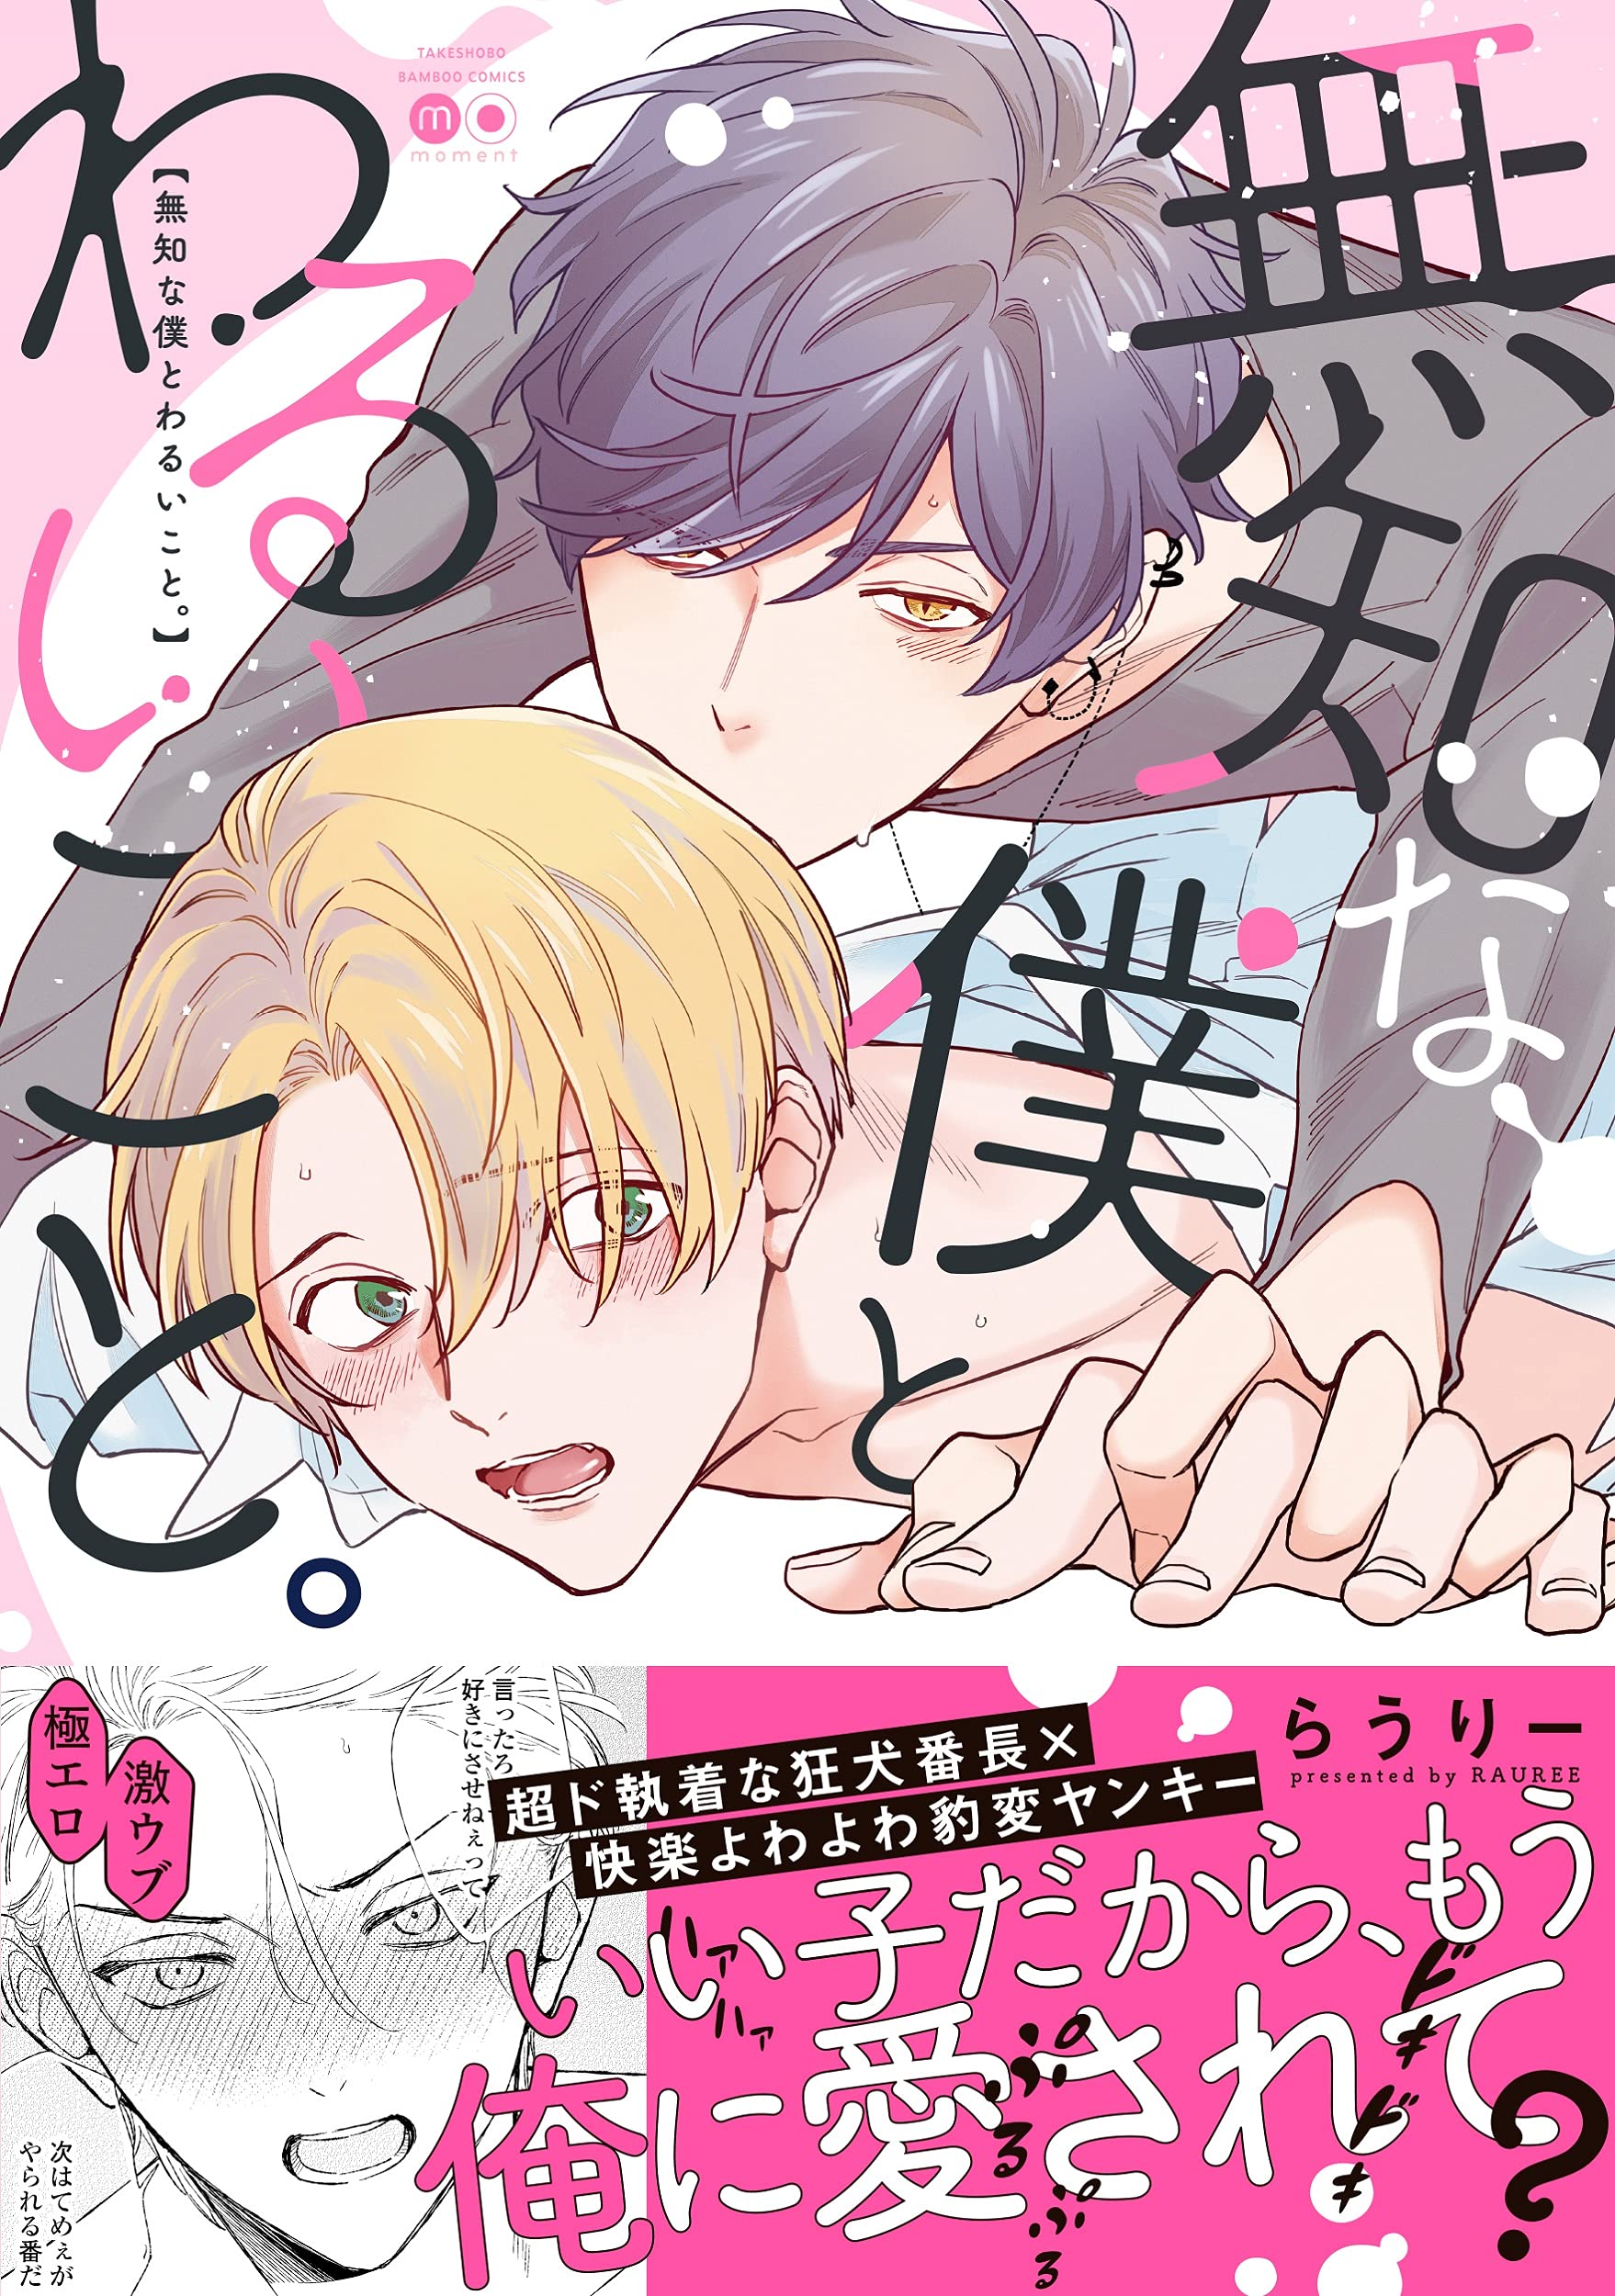 Boys Love (Yaoi) Comics - Muchi na Boku to Waruikoto (My Alter-Ego is a Gangster!) (無知な僕とわるいこと。 (バンブーコミックス moment)) / Rauree